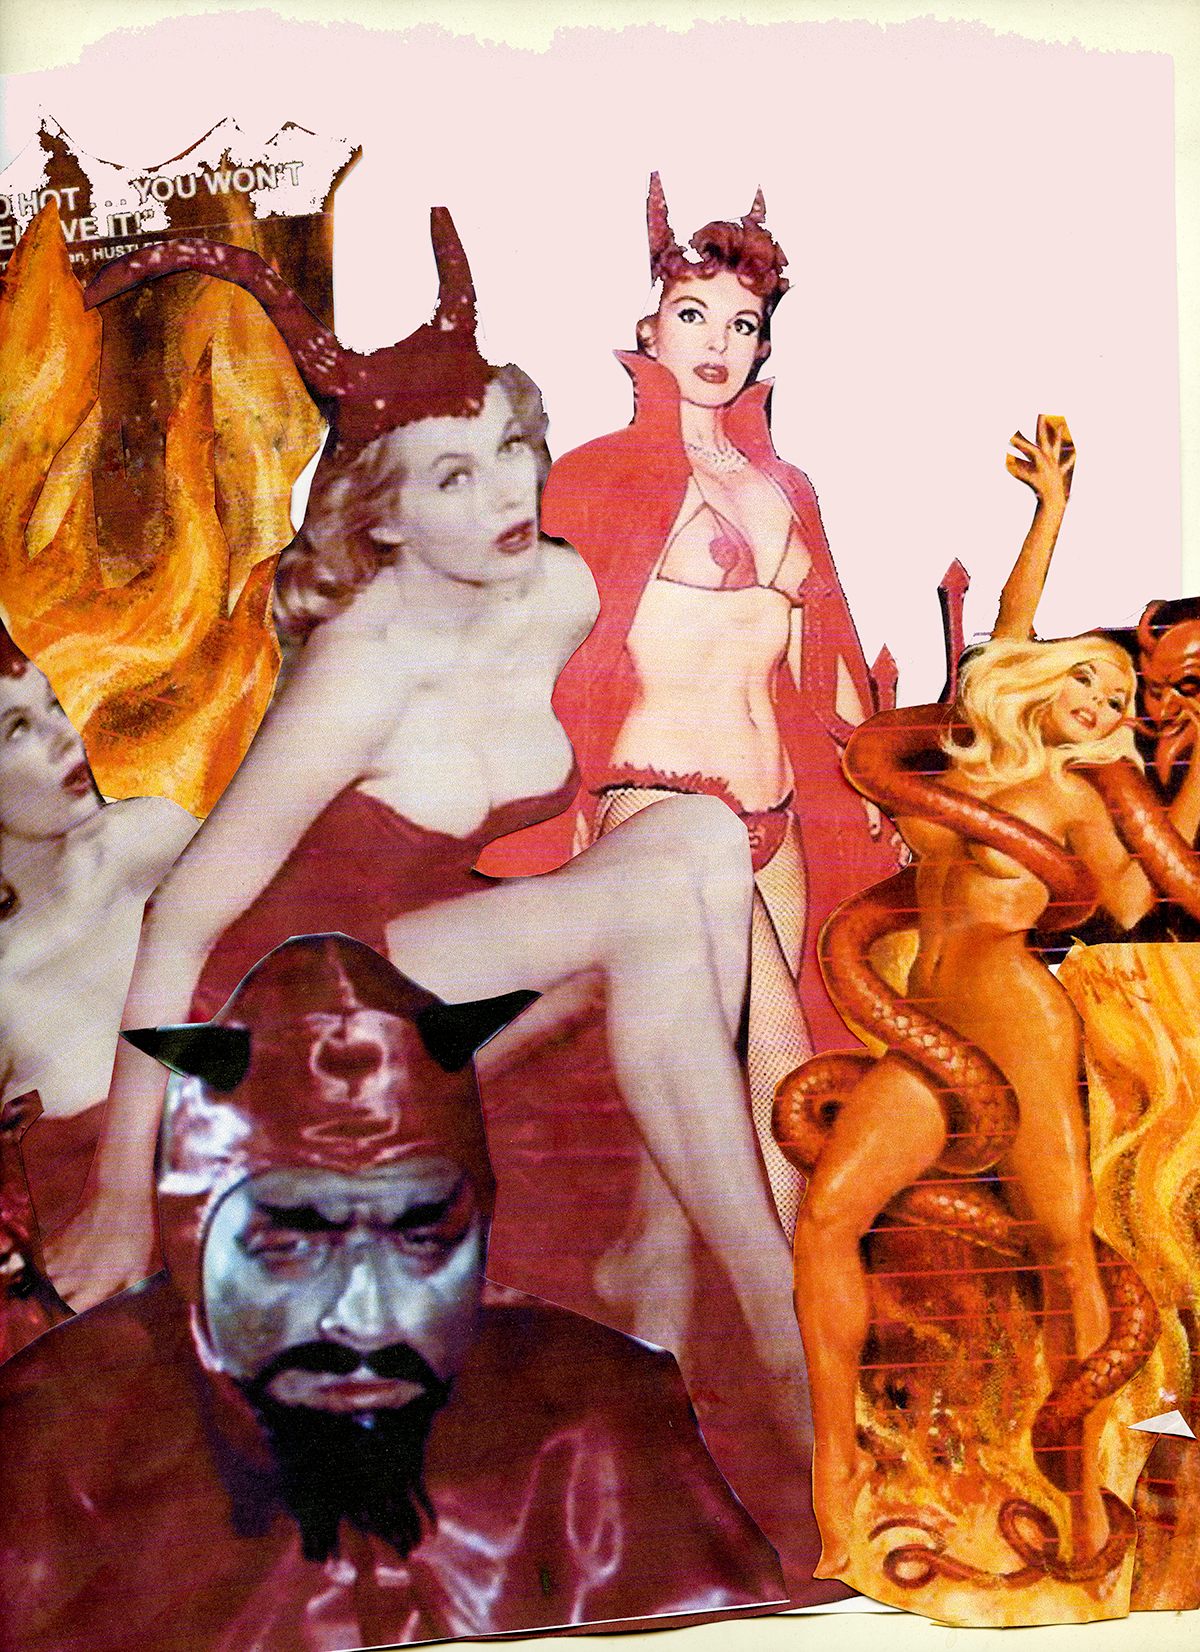 Satanic Porn Movies 70s - The Devilish Sexploitation Films That Combined Satan and Sensuality - Atlas  Obscura